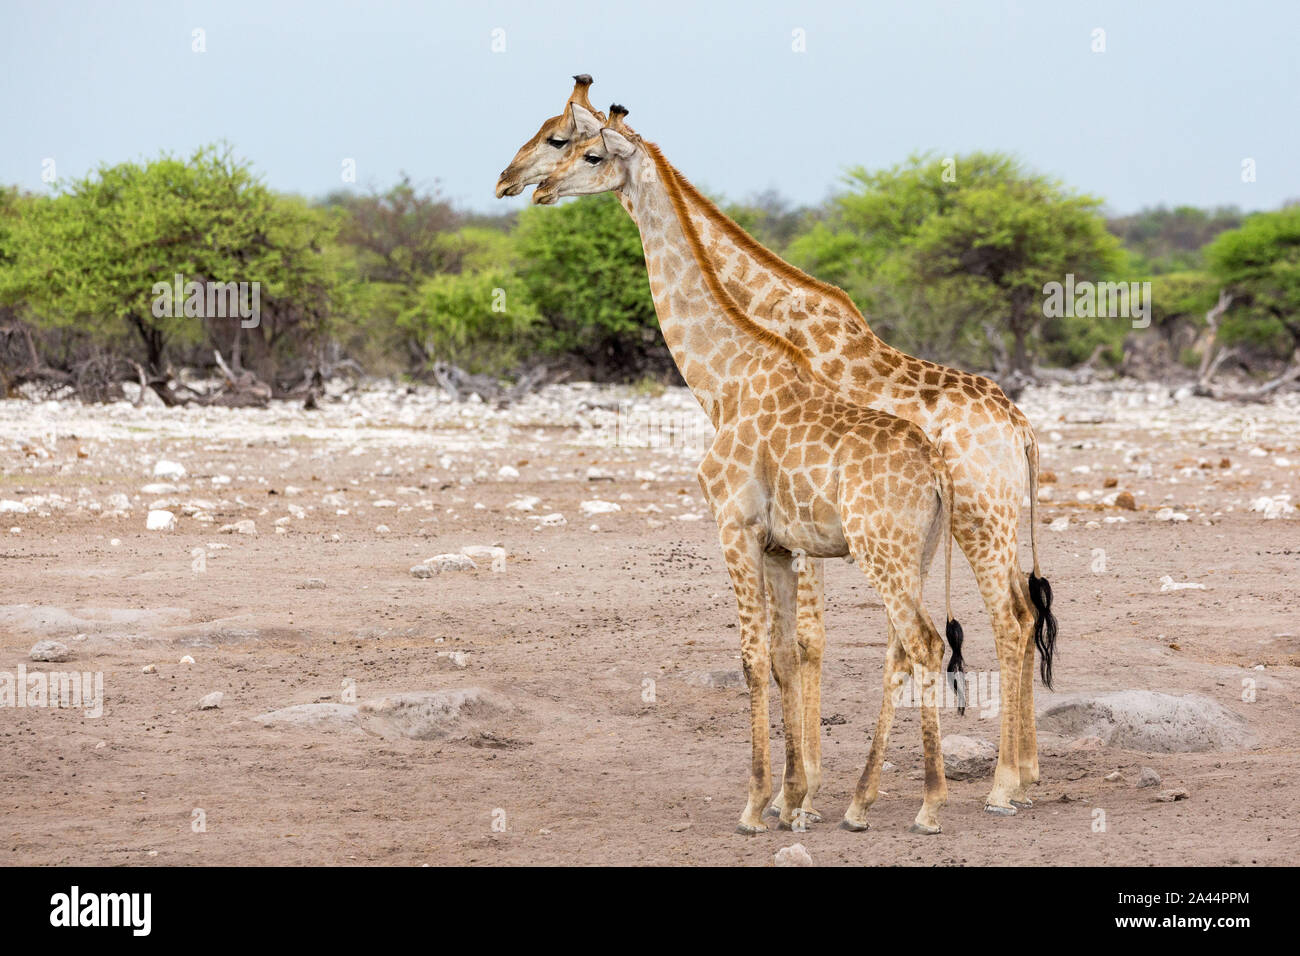 Cute giraffes standing close together, Etosha, Namibia, Africa Stock Photo